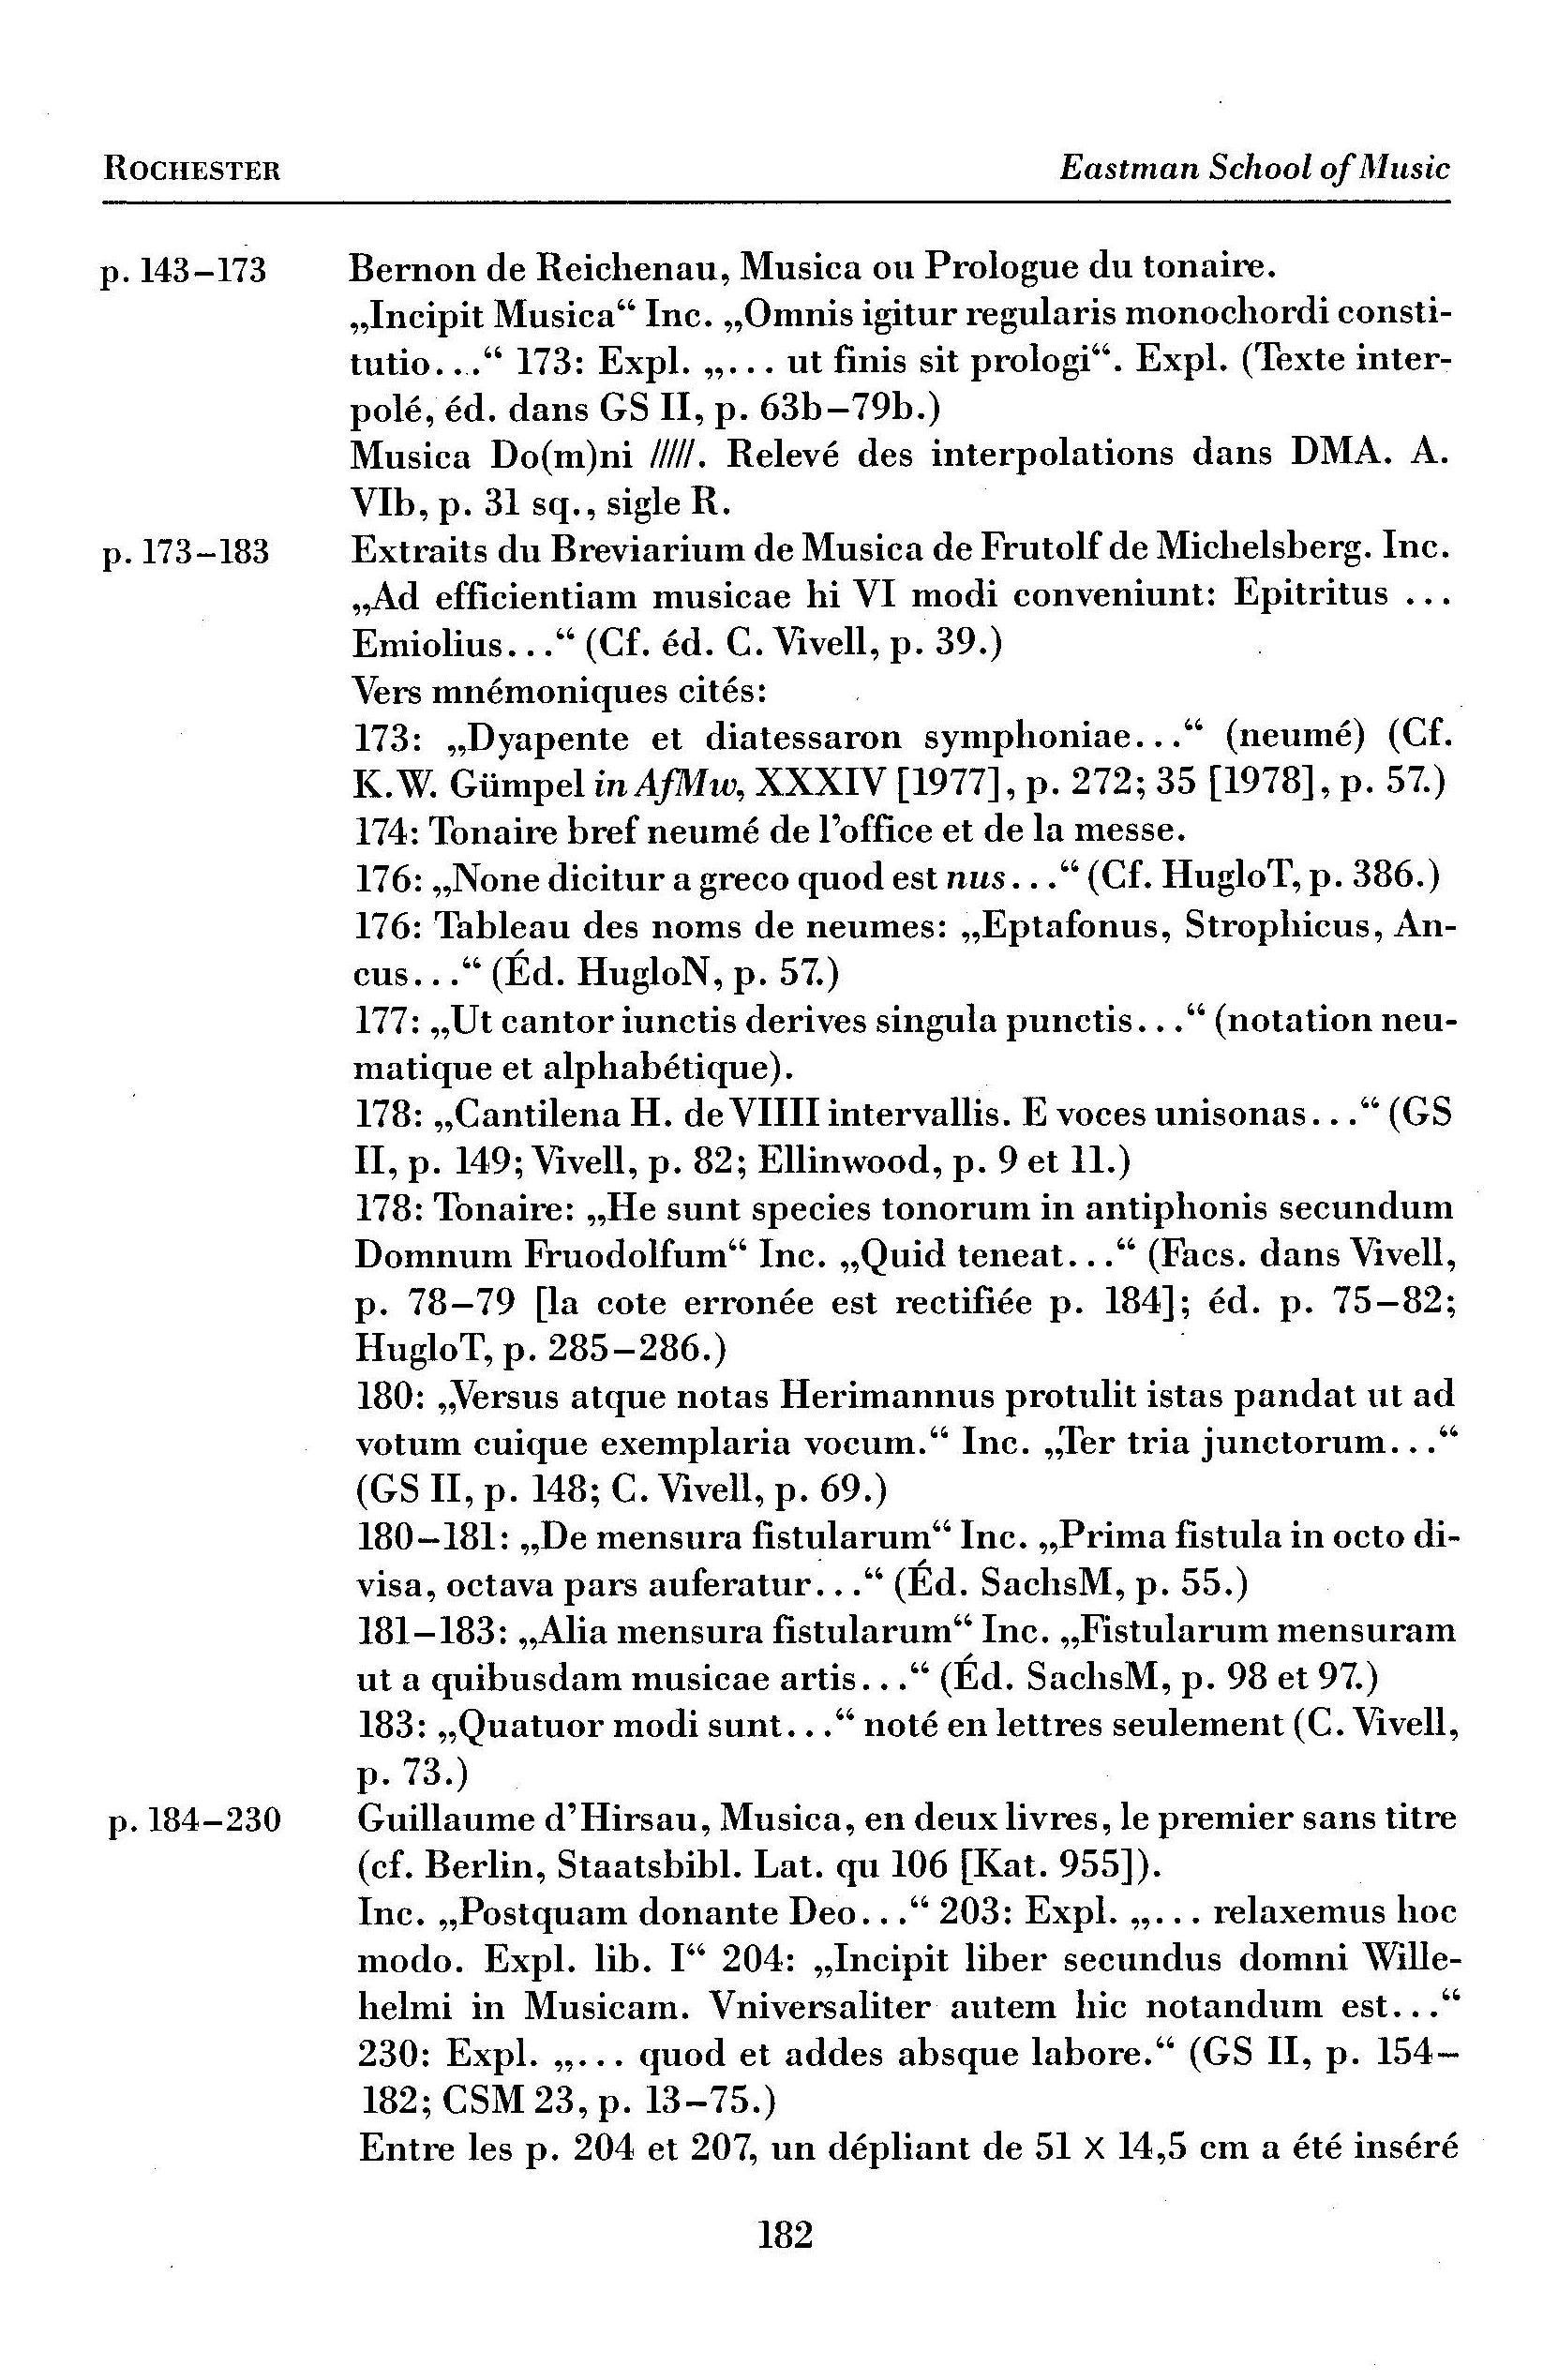 RISM IV, description of Rochester Codex, page 3